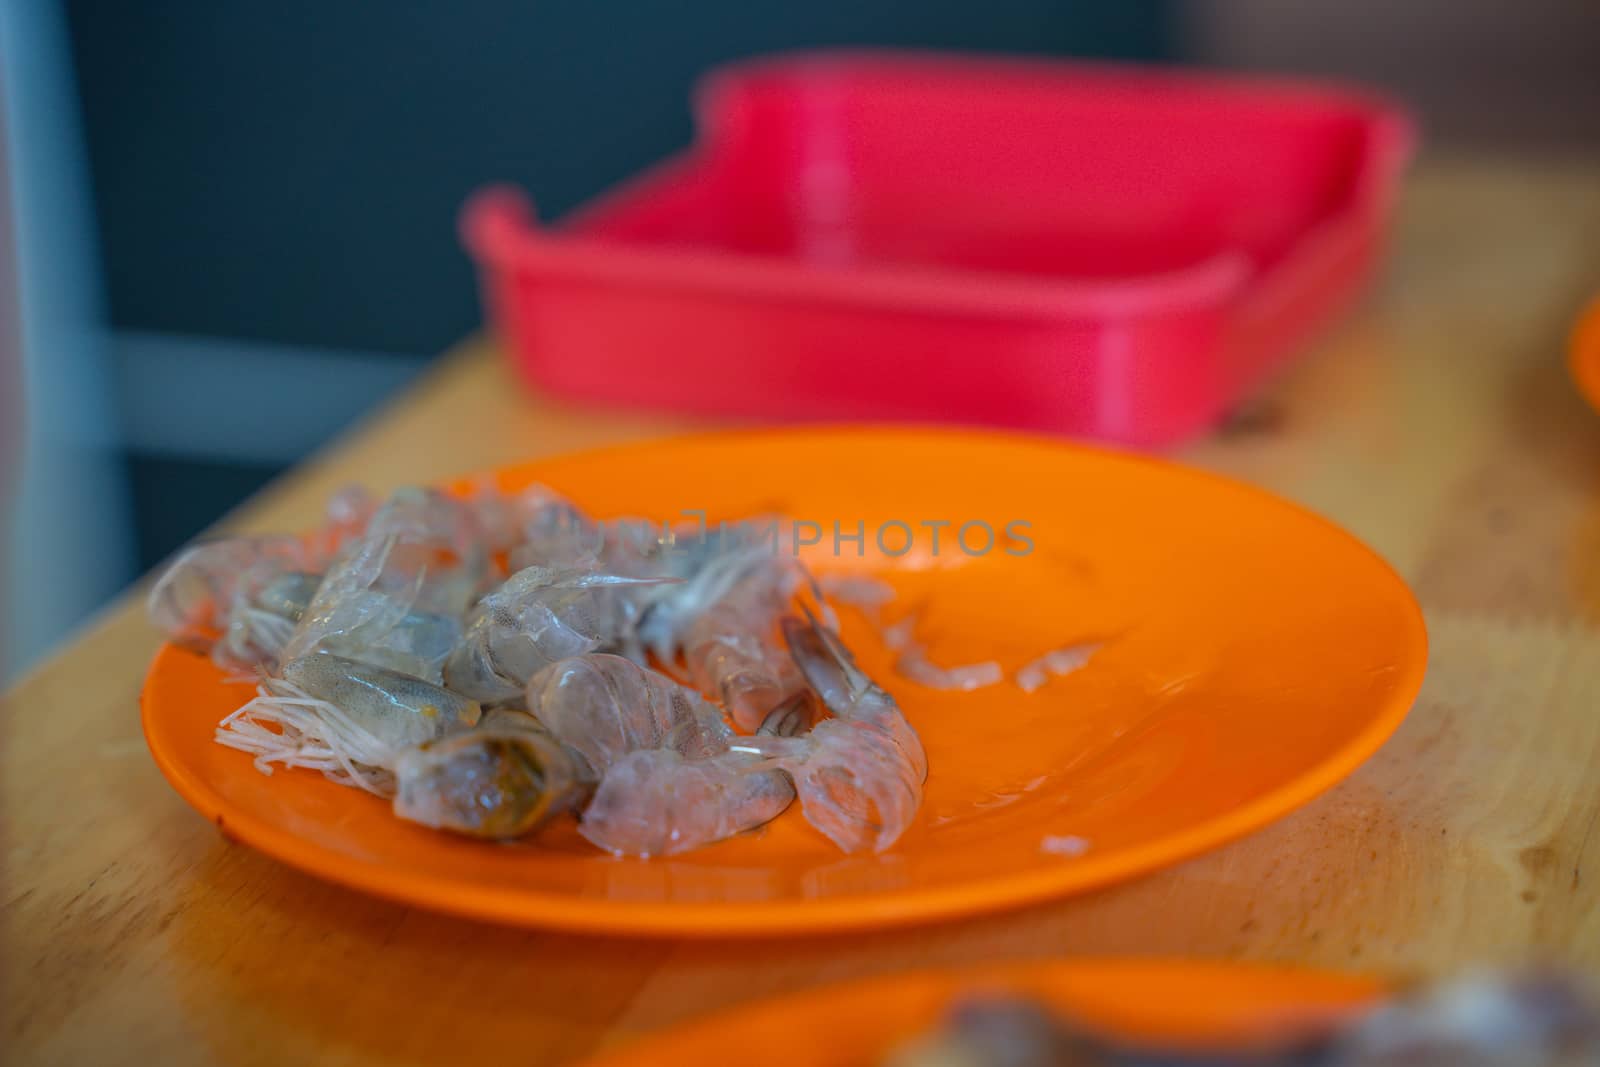 pile of peeled shrimp shell on the orange plate by peerapixs